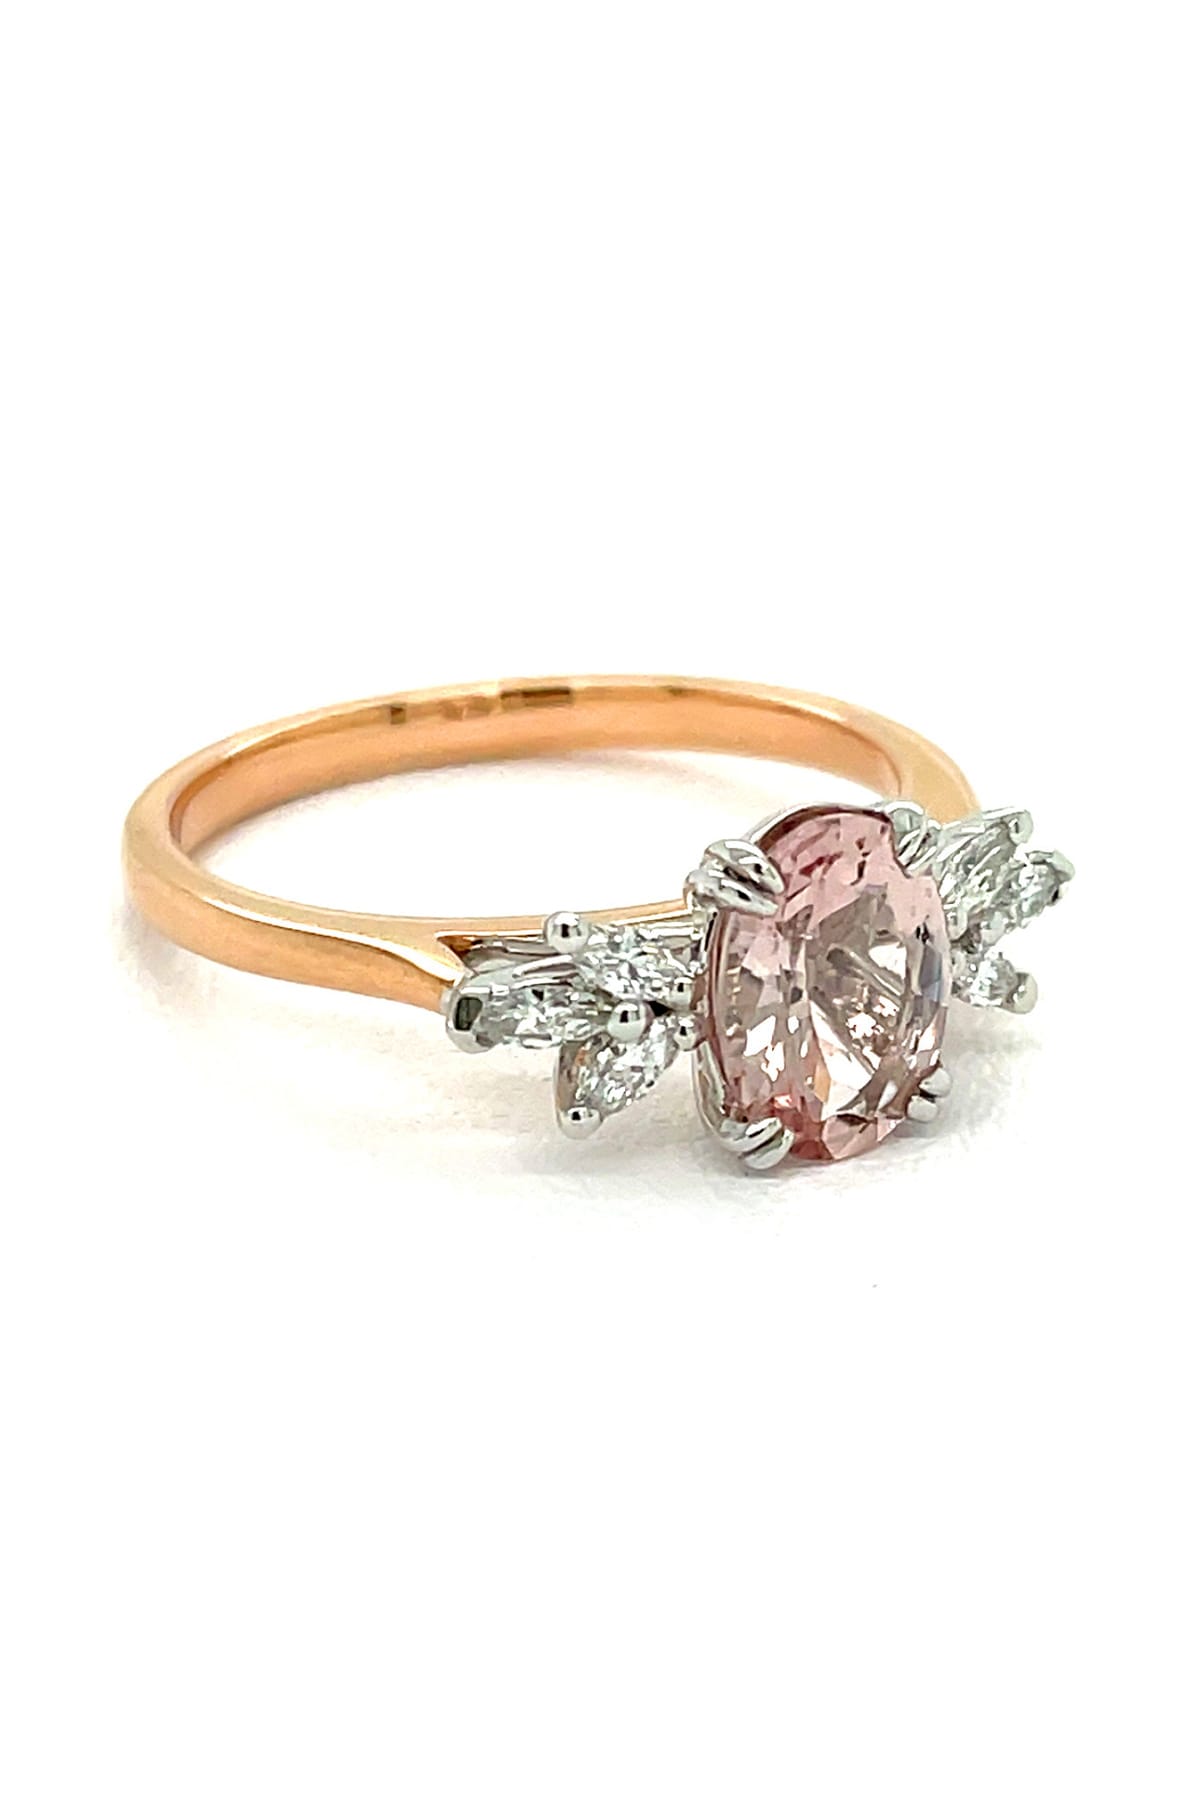 Oval Morganite And Diamond Dress Ring available at LeGassick Diamonds and Jewellery Gold Coast, Australia.